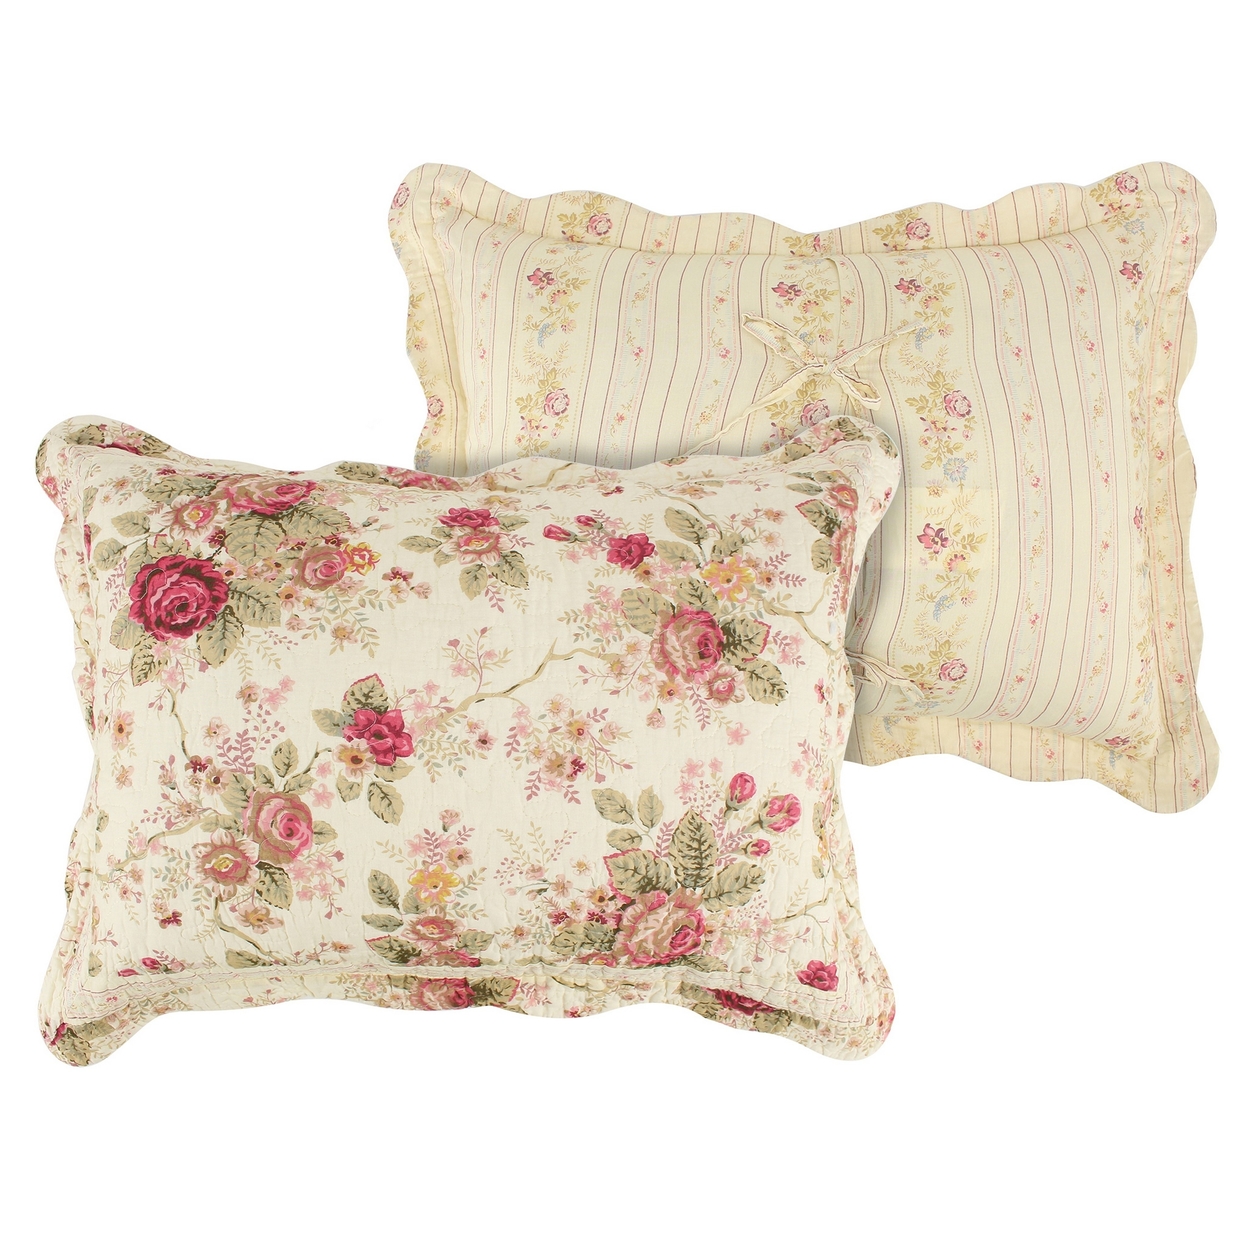 Rosle 3 Piece Queen Bedspread Set, Floral Print, Scalloped, Cream, Pink- Saltoro Sherpi